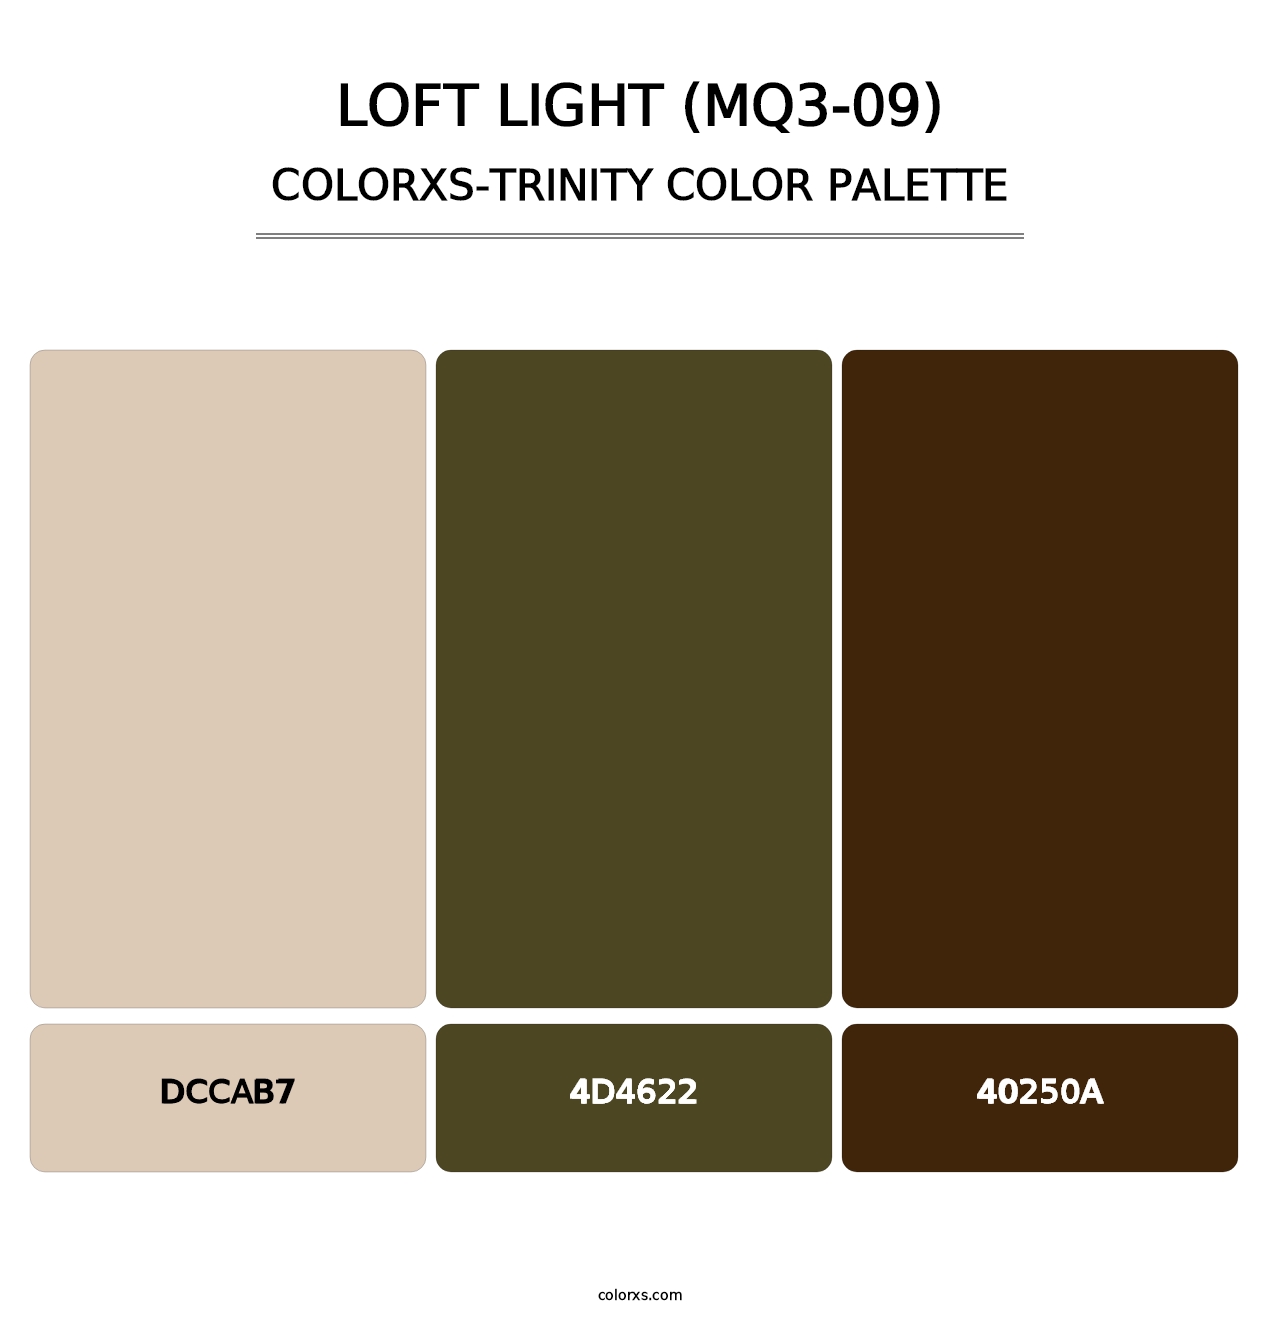 Loft Light (MQ3-09) - Colorxs Trinity Palette